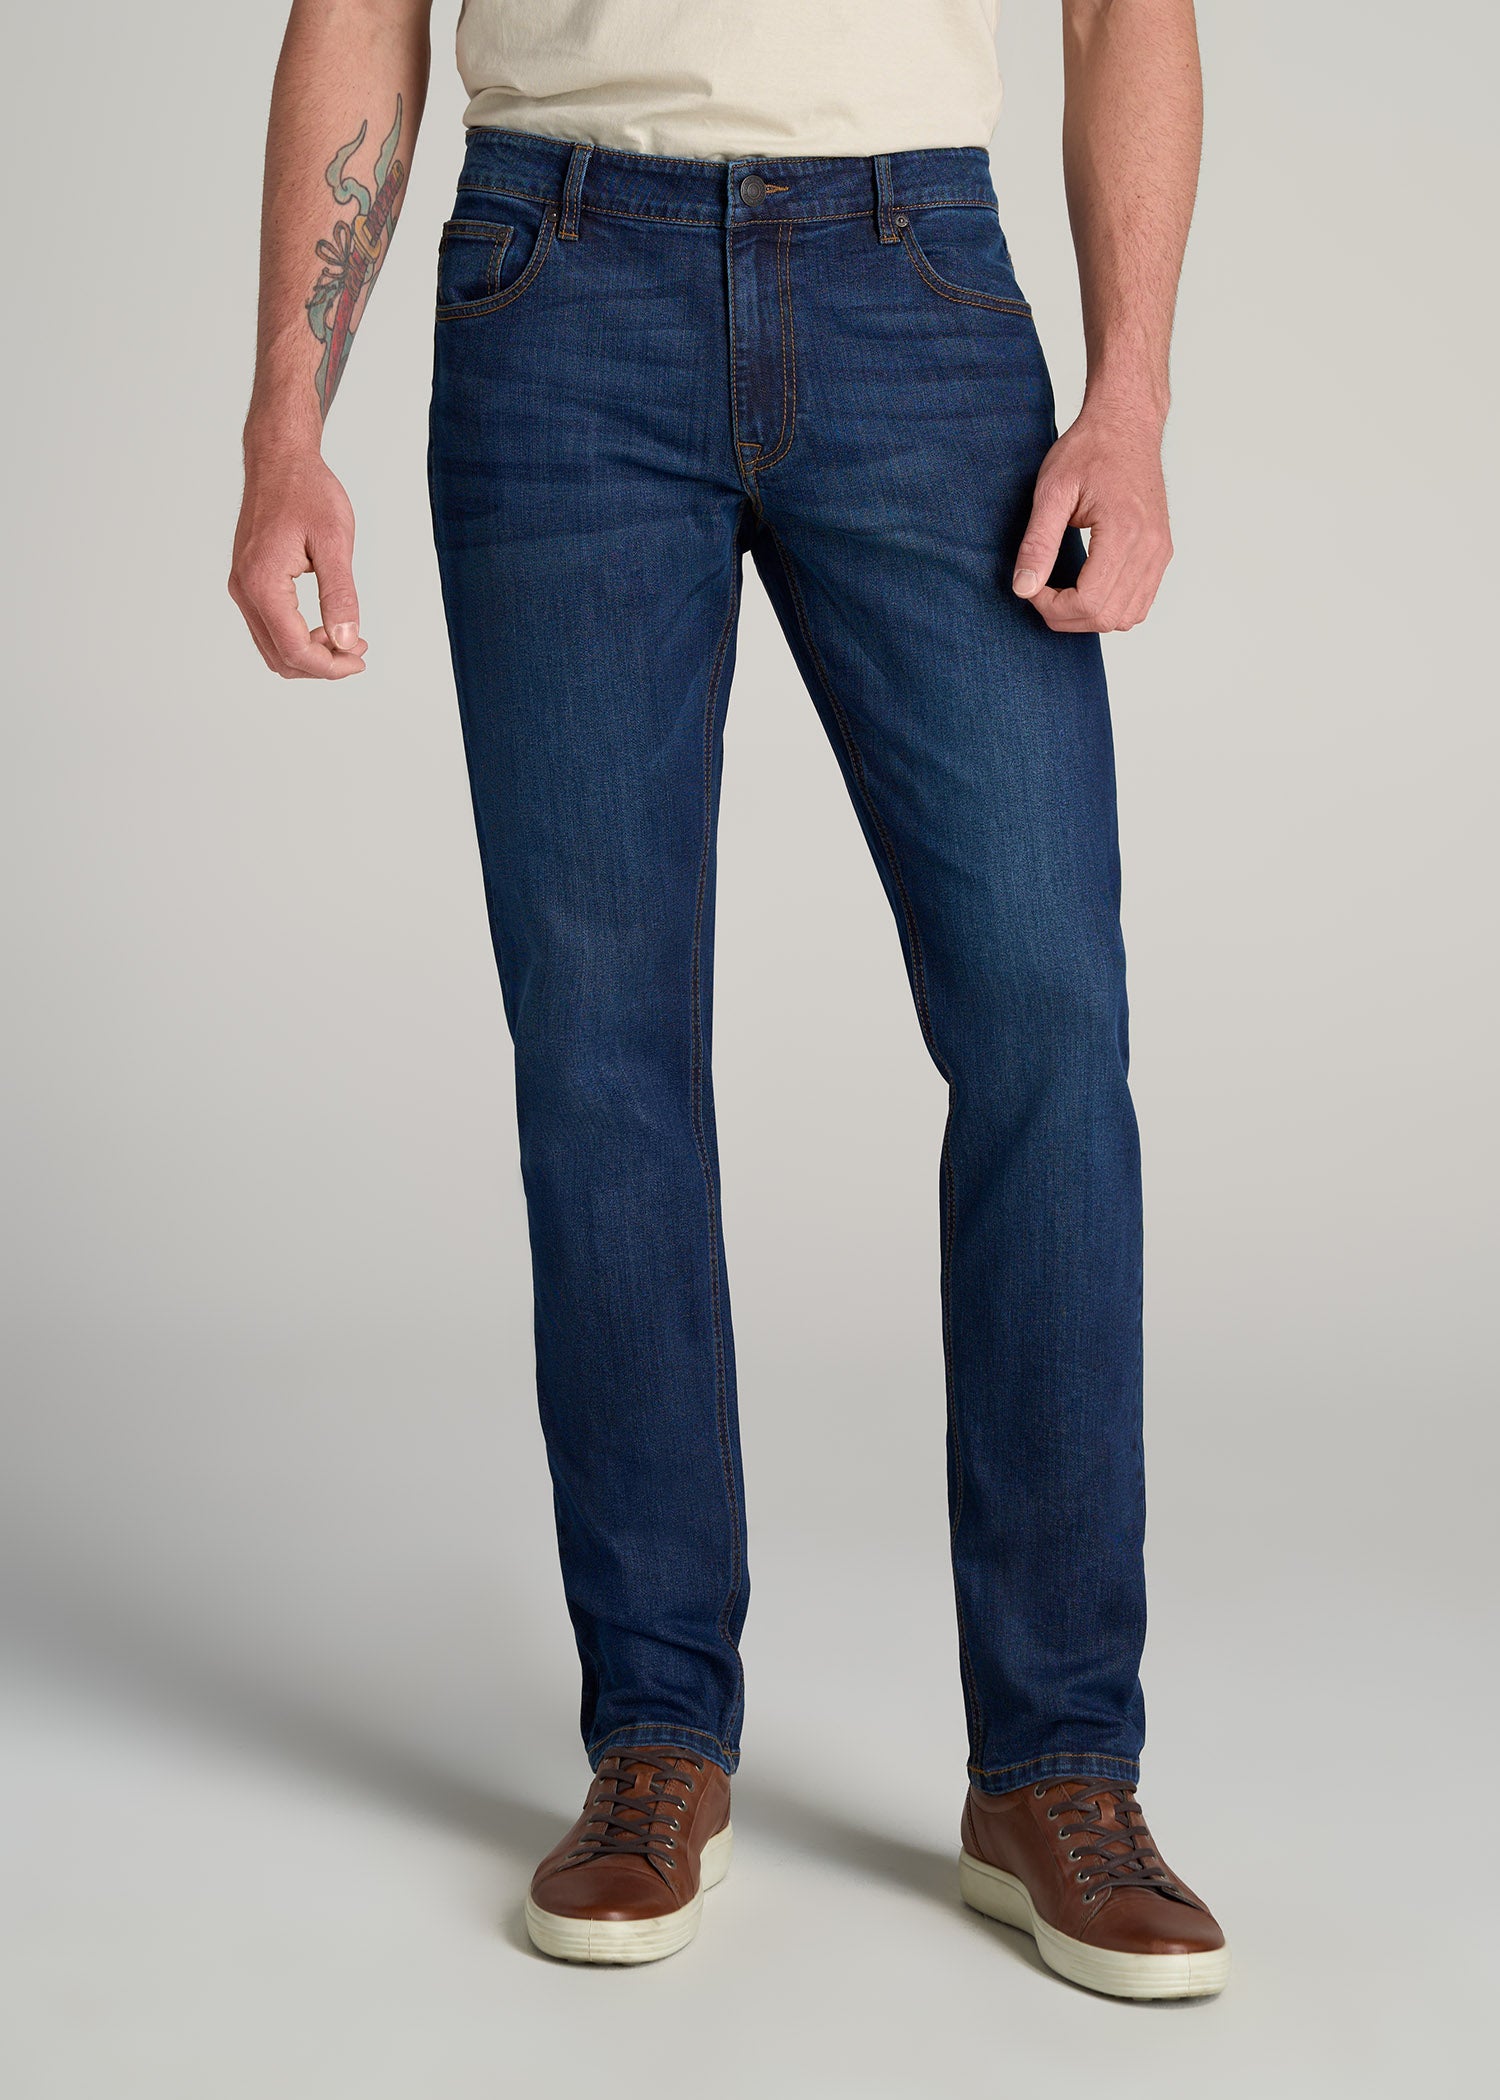 Men\'s Slim Taper Jeans: Slim Taper Fit Carman Charger Blue Jeans – American  Tall | Slim-Fit Jeans